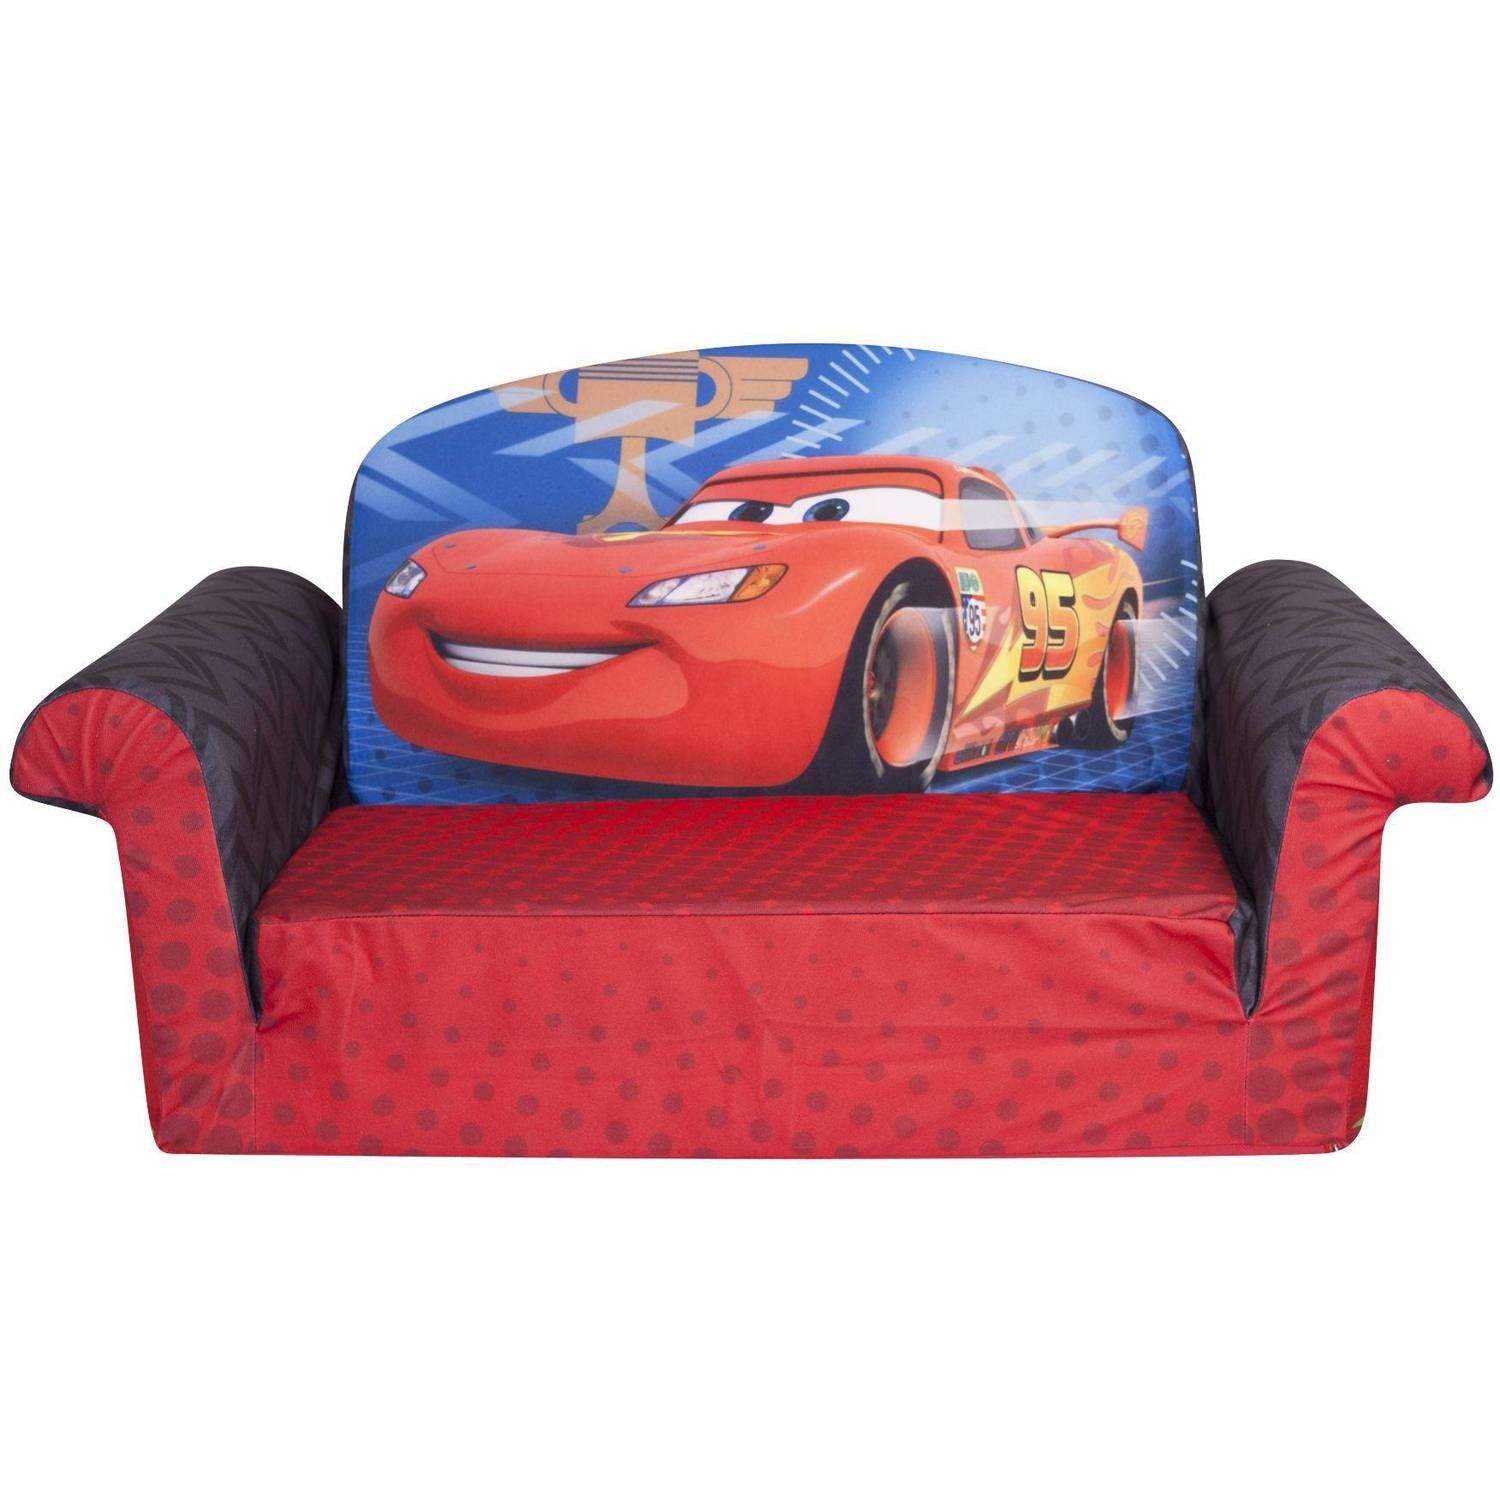 Marshmallow 2 In 1 Flip Open Sofa Disney Cars 2 Walmart Pertaining To Cheap Kids Sofas 